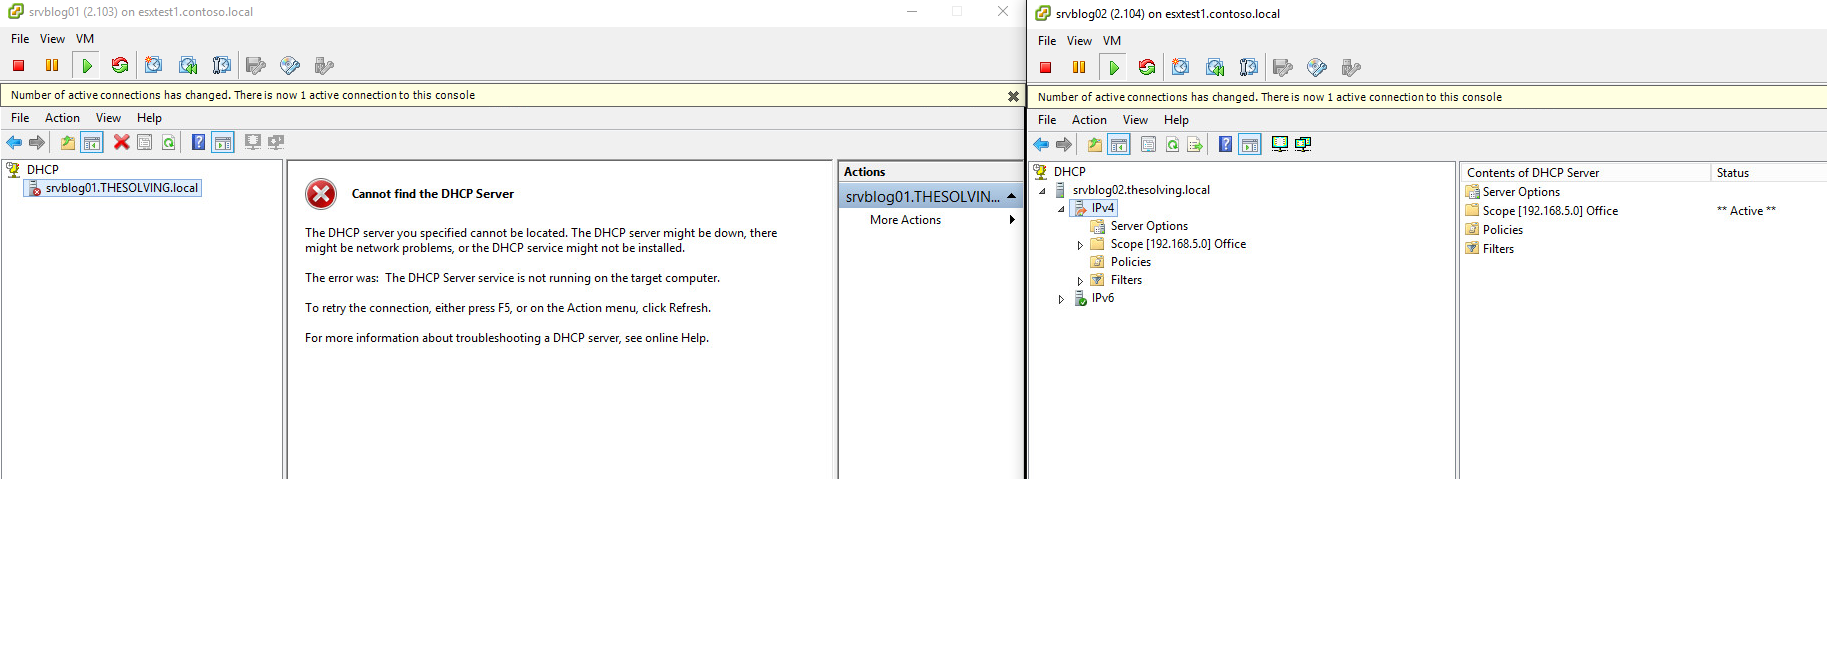 Konfigurieren des DHCP-Failovers unter Windows Server 2012 R2